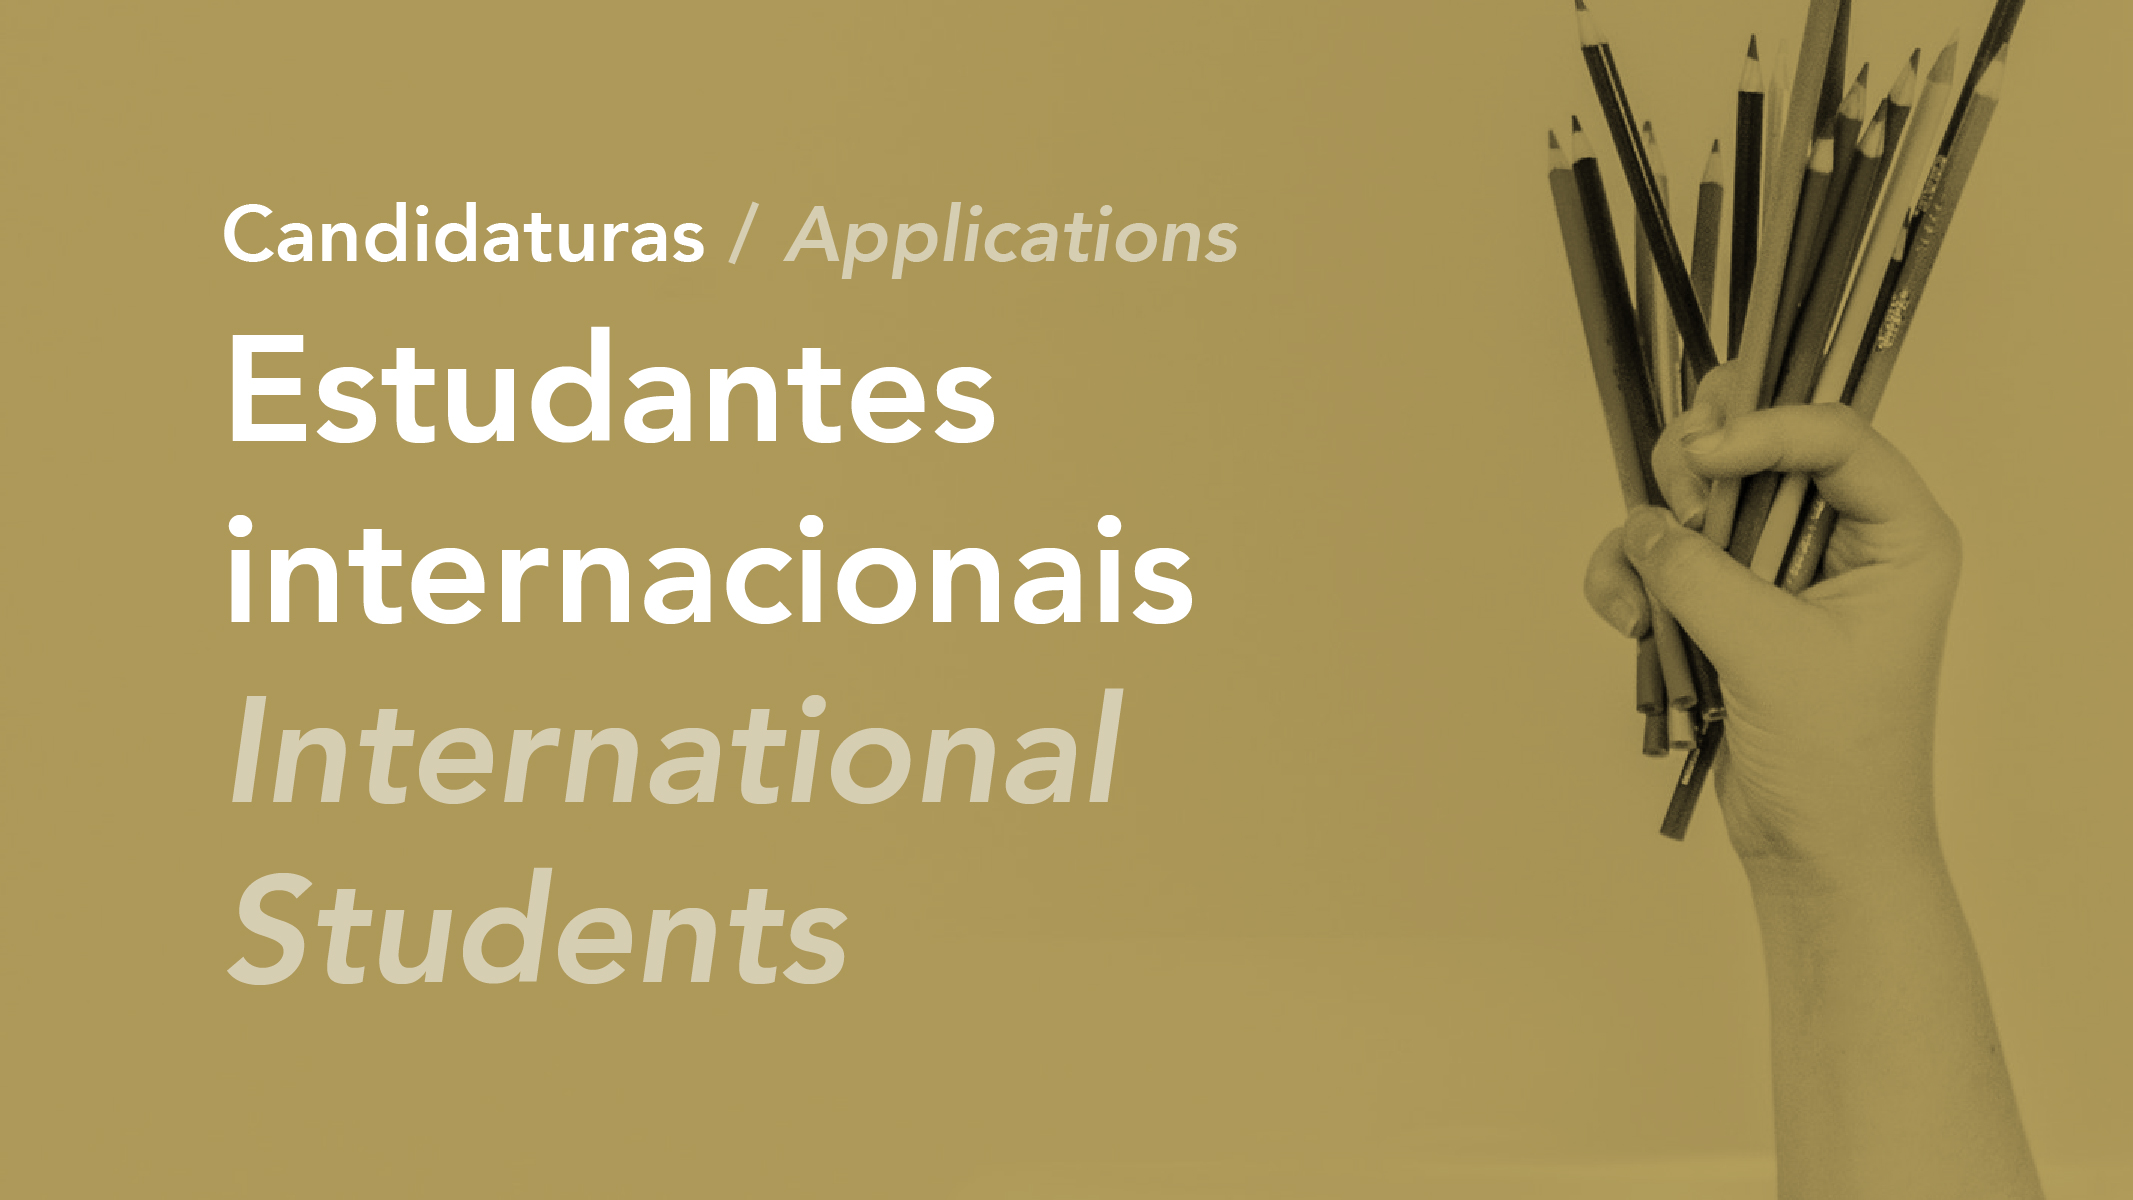 Abertas as candidaturas para estudantes internacionais / Applications for international students are open